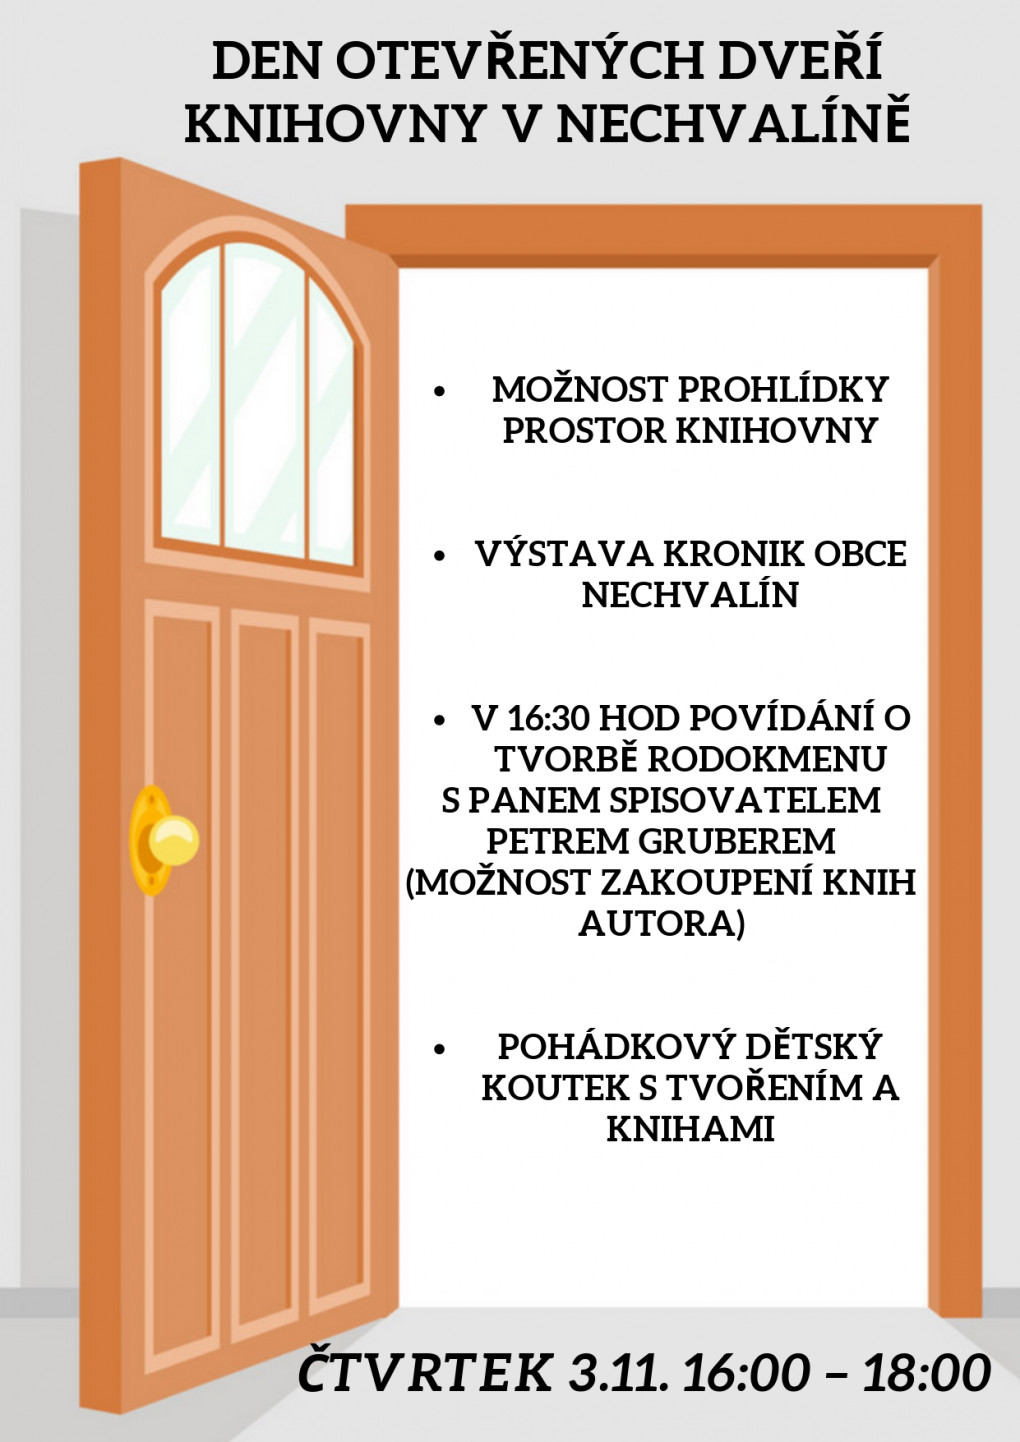 den_otevrenych_dveri_knihovny_v_nechvaline-01_page-0001.jpg